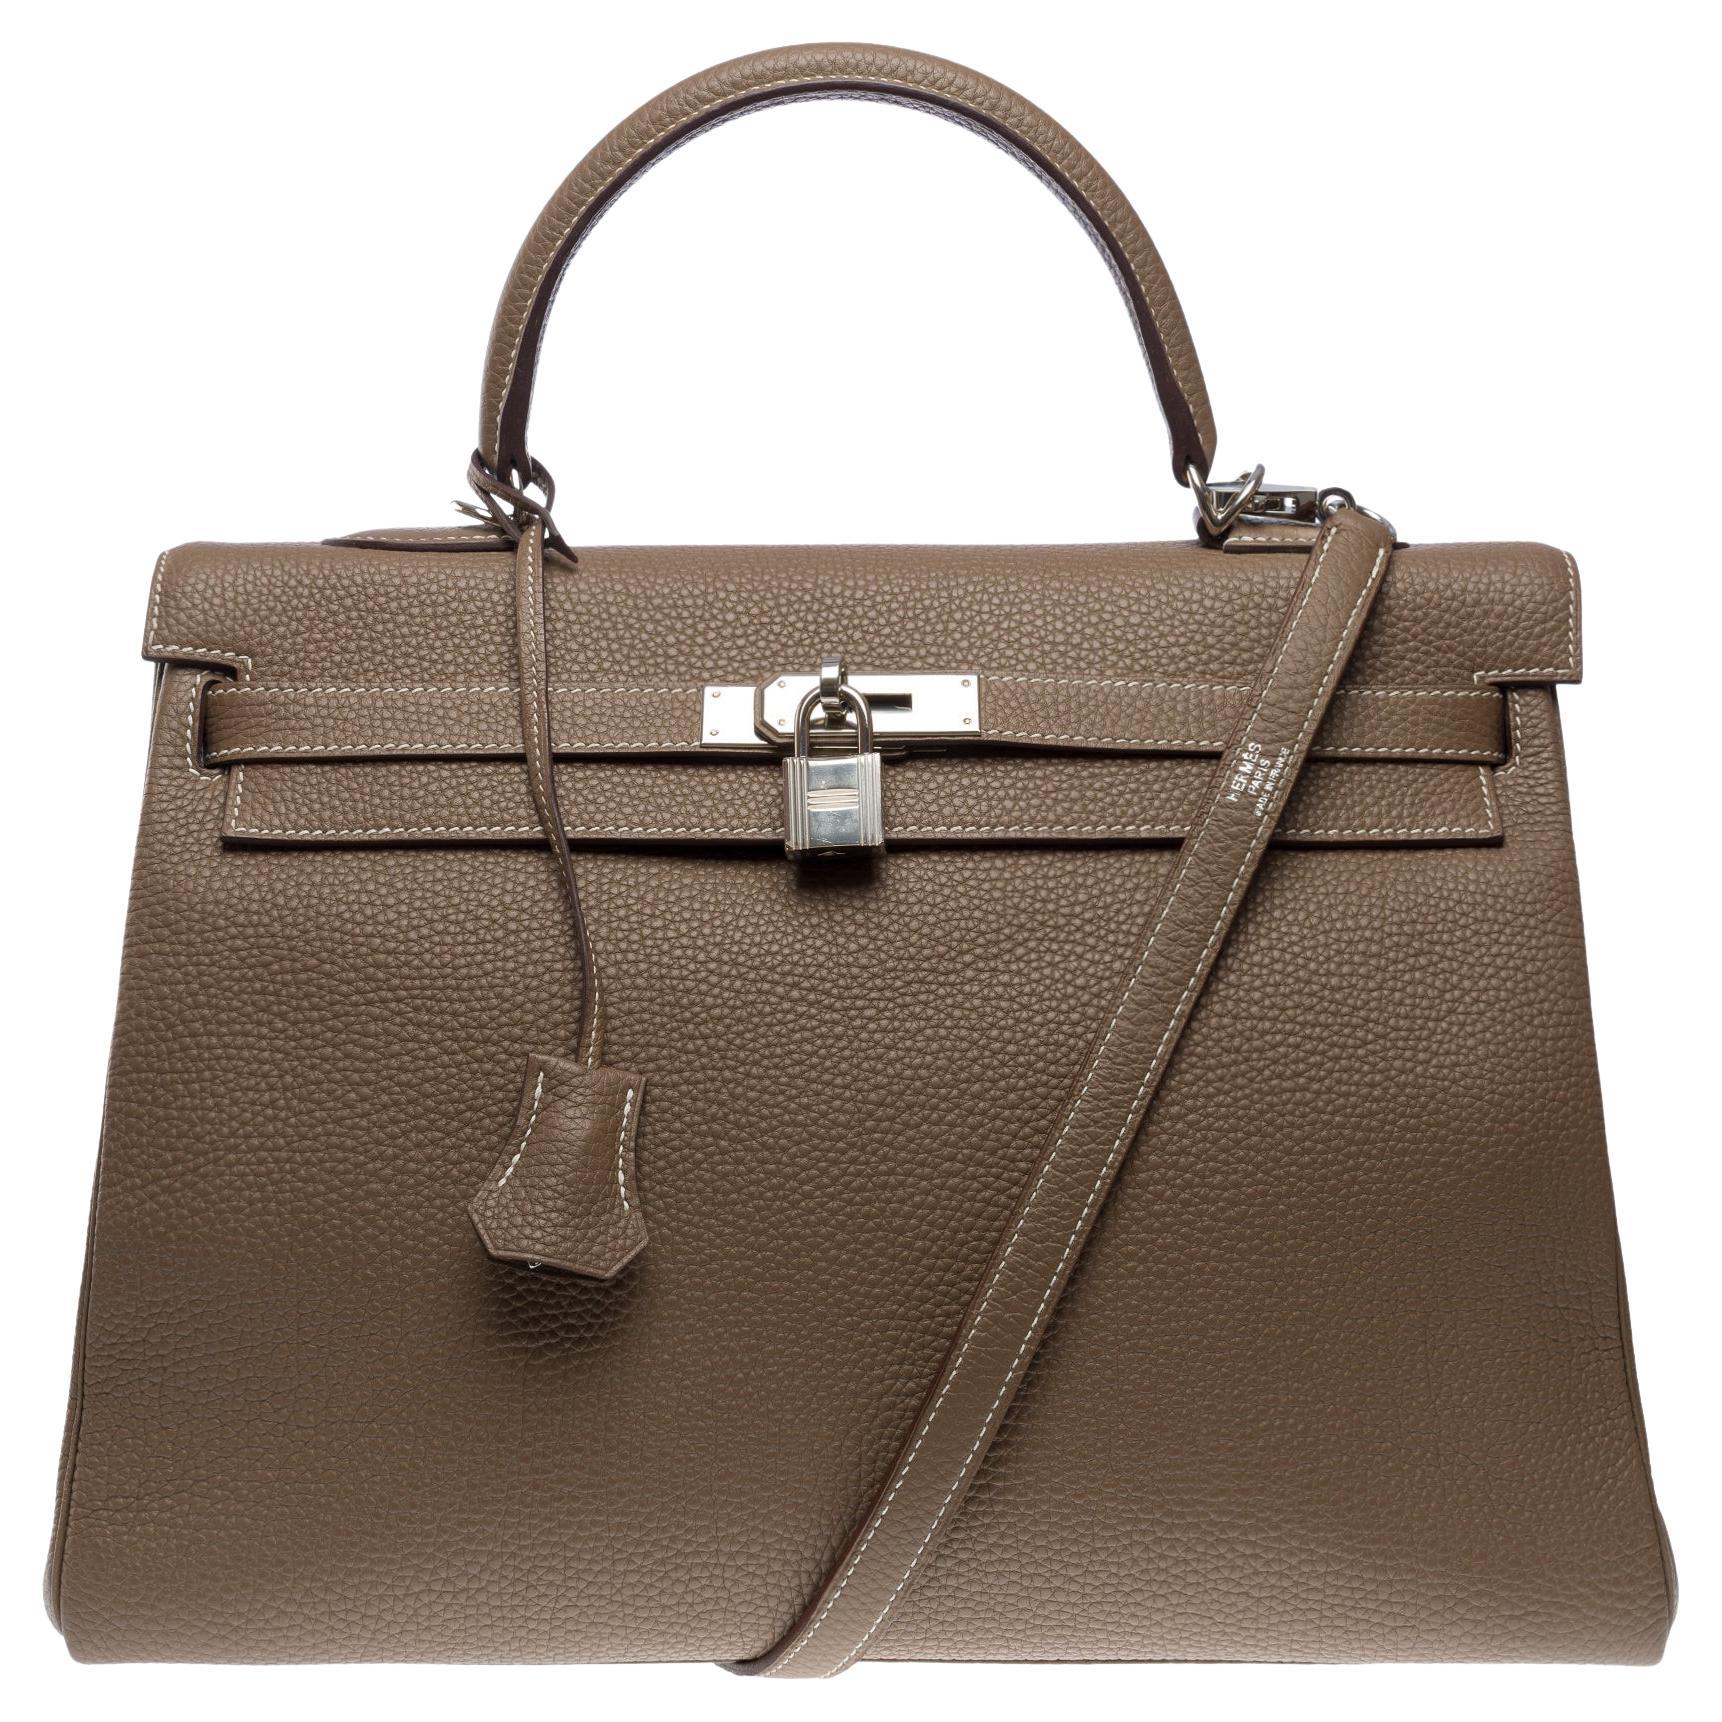 Almost New Hermès Kelly 35 retourne handbag strap in Etoupe Togo leather, SHW For Sale